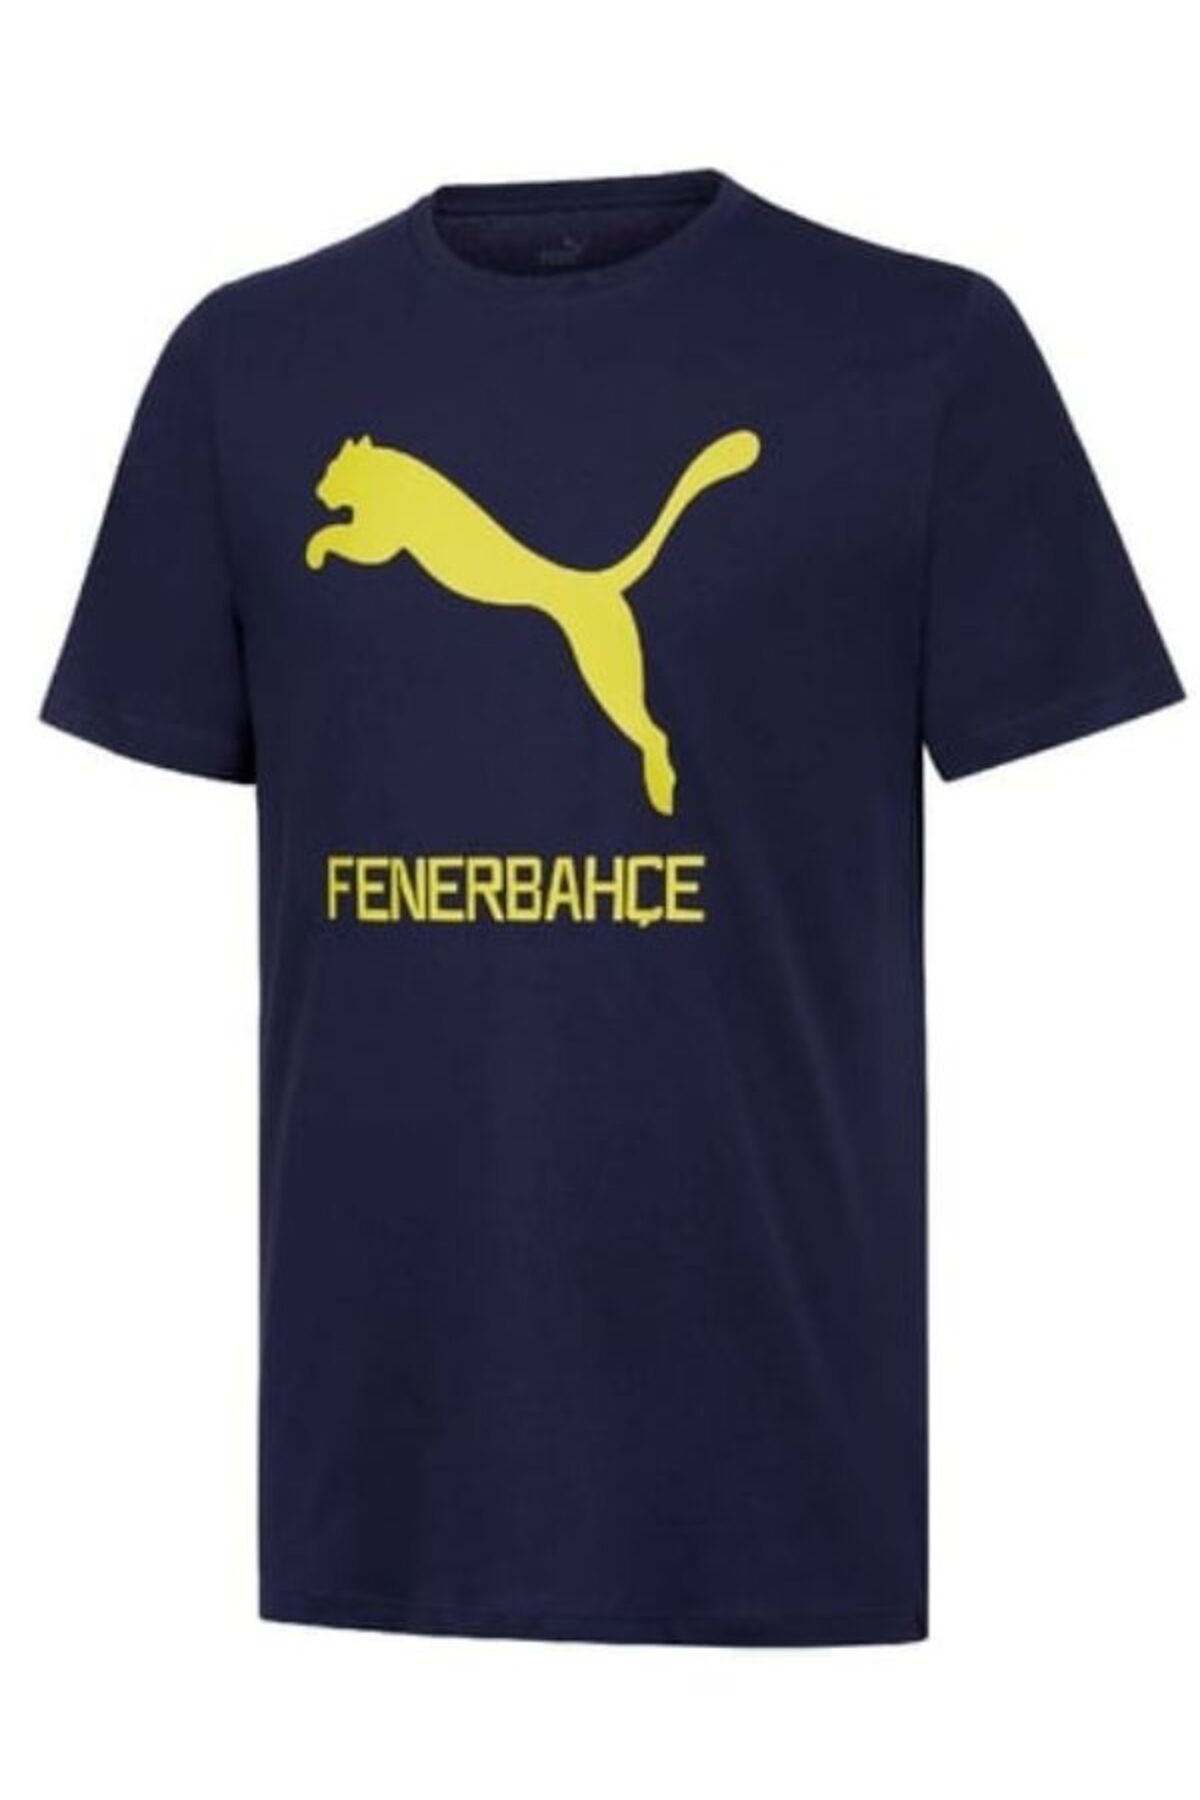 Puma Fenerbahçe Lacivert T-Shirt